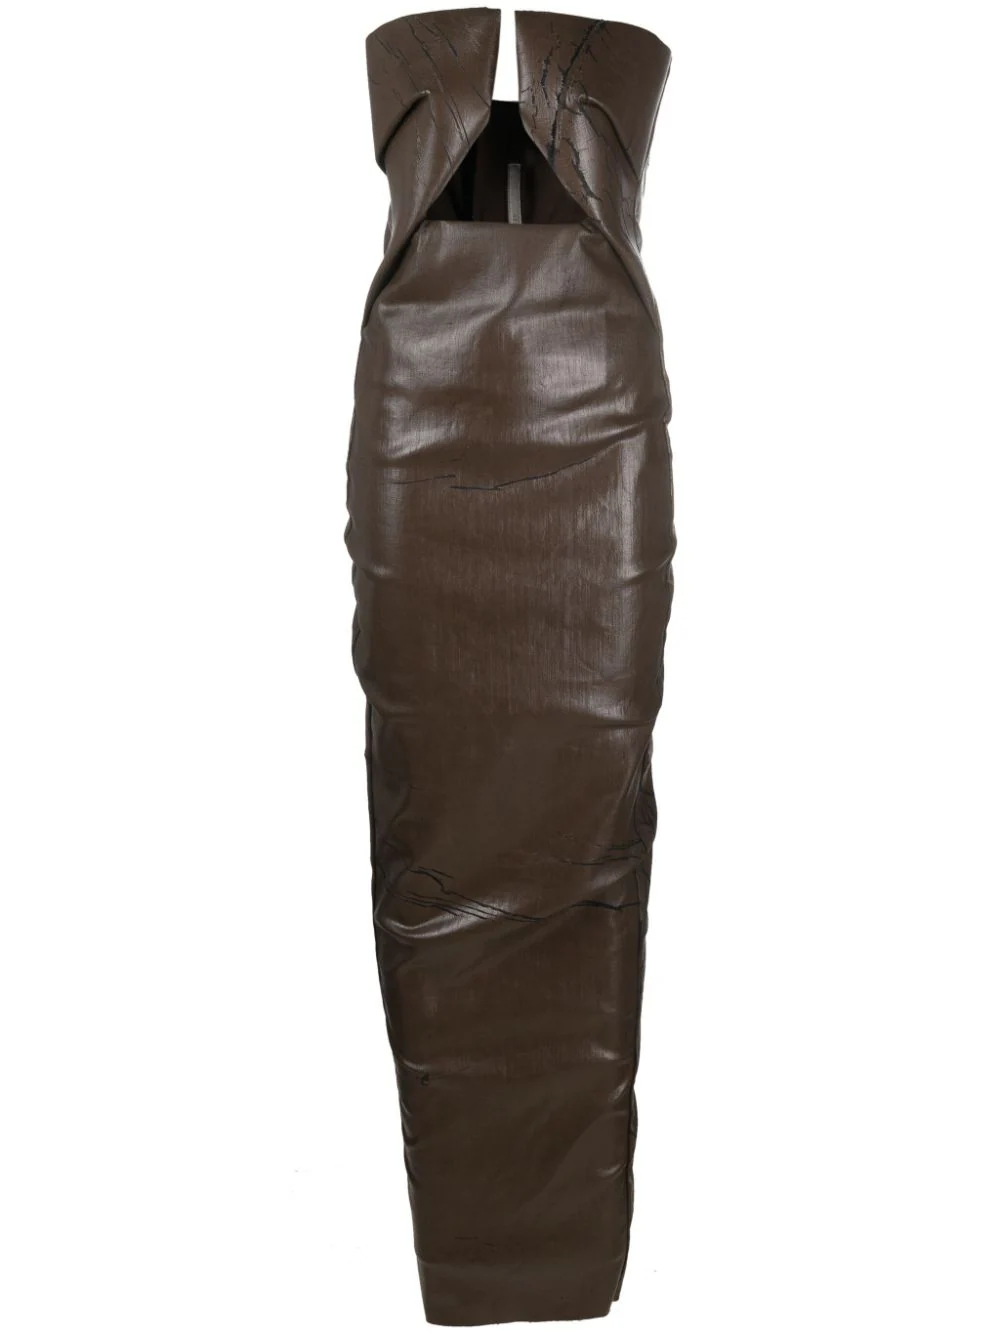 Lisa Hochstein's Brown Leather Dress on WWHL